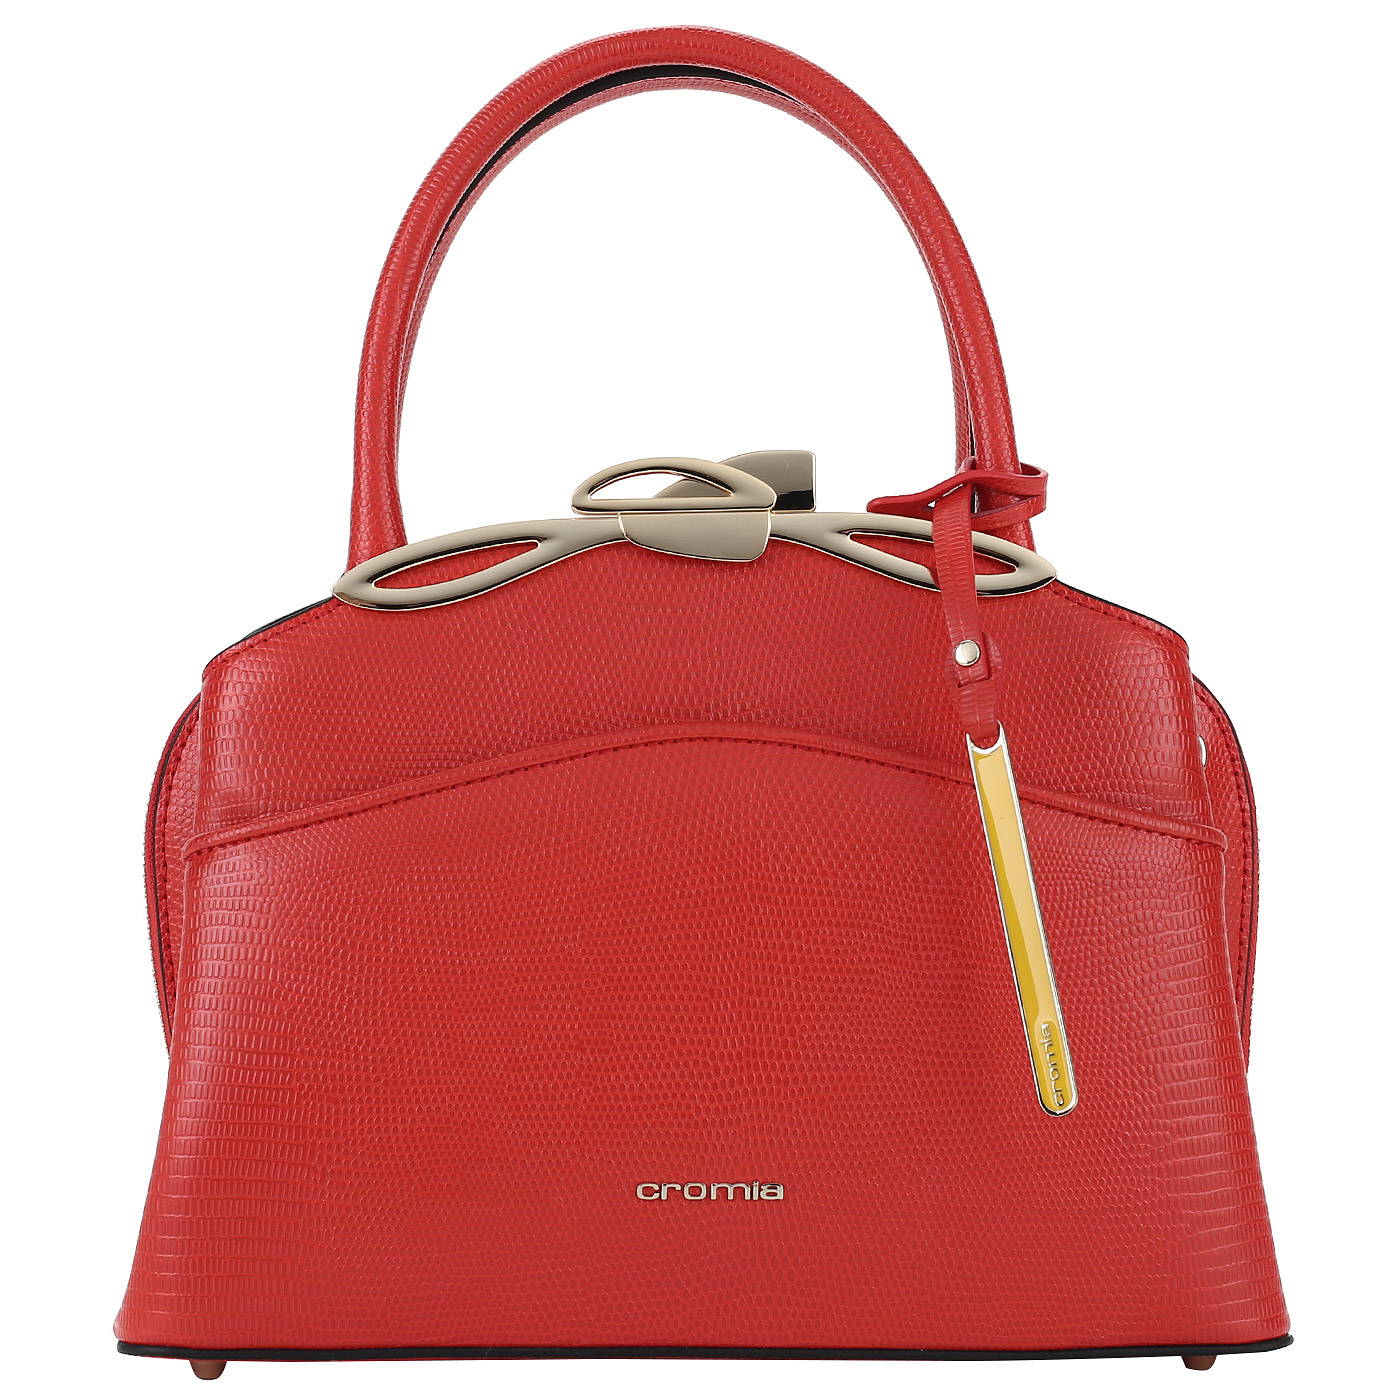 Cromia Женская сумочка из красной кожи